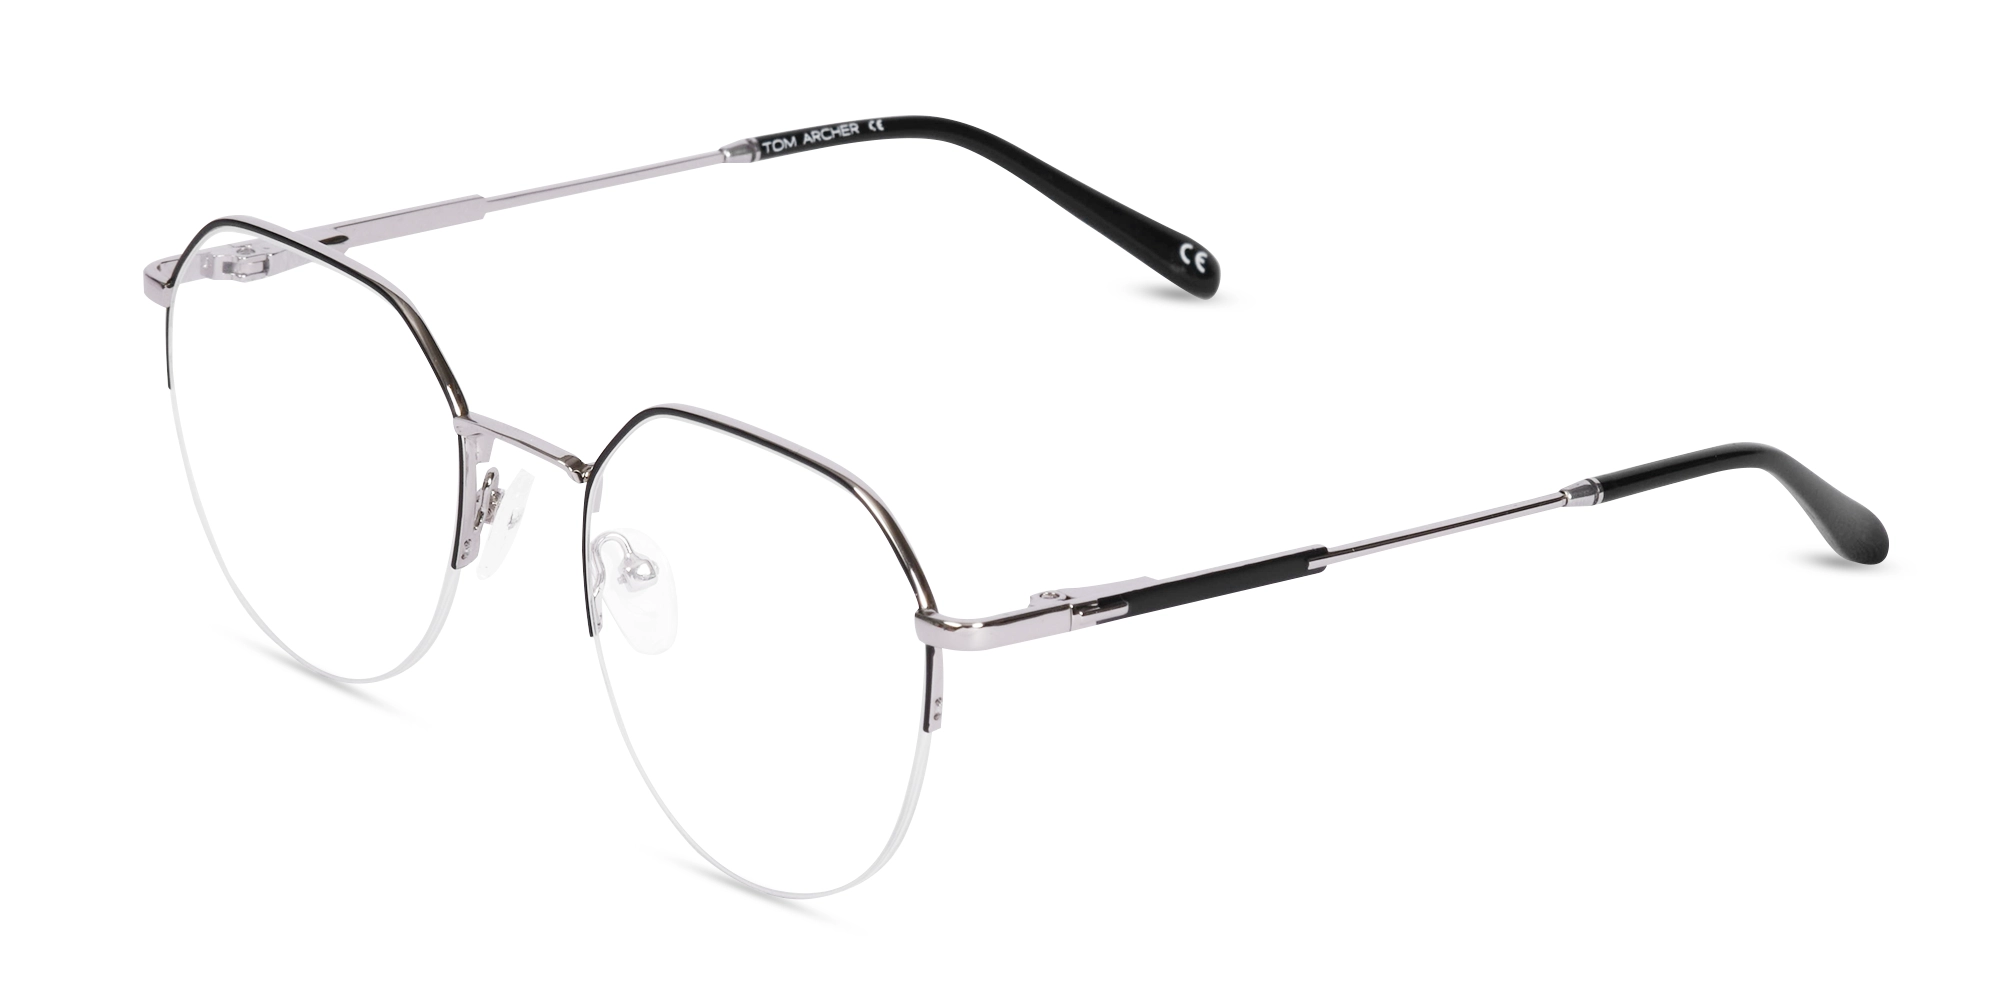 Half Rimless Glasses Frames